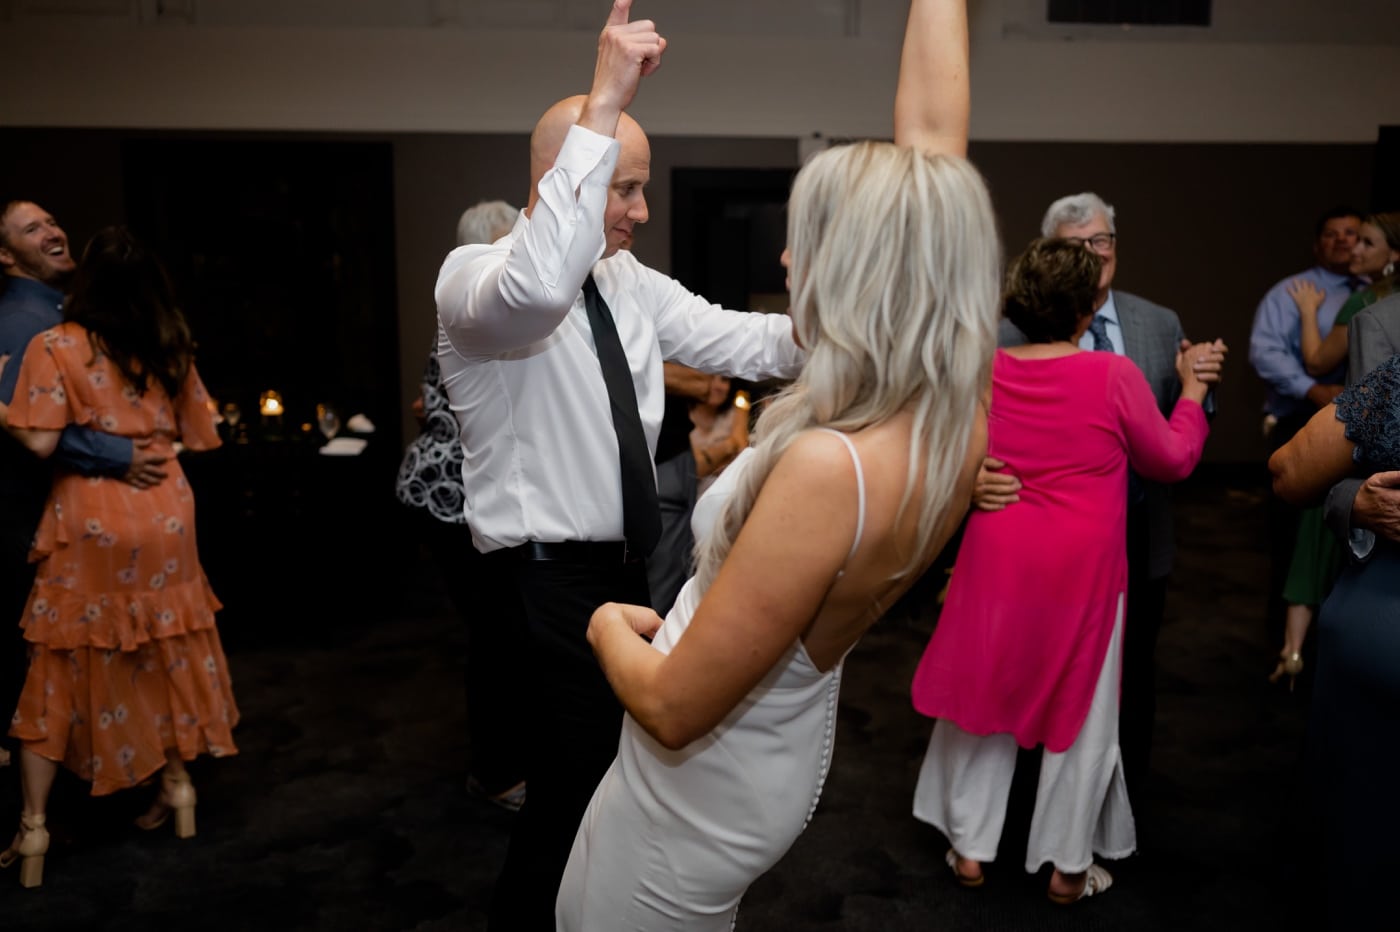 bride and groom dancing at surety hotel wedding reception